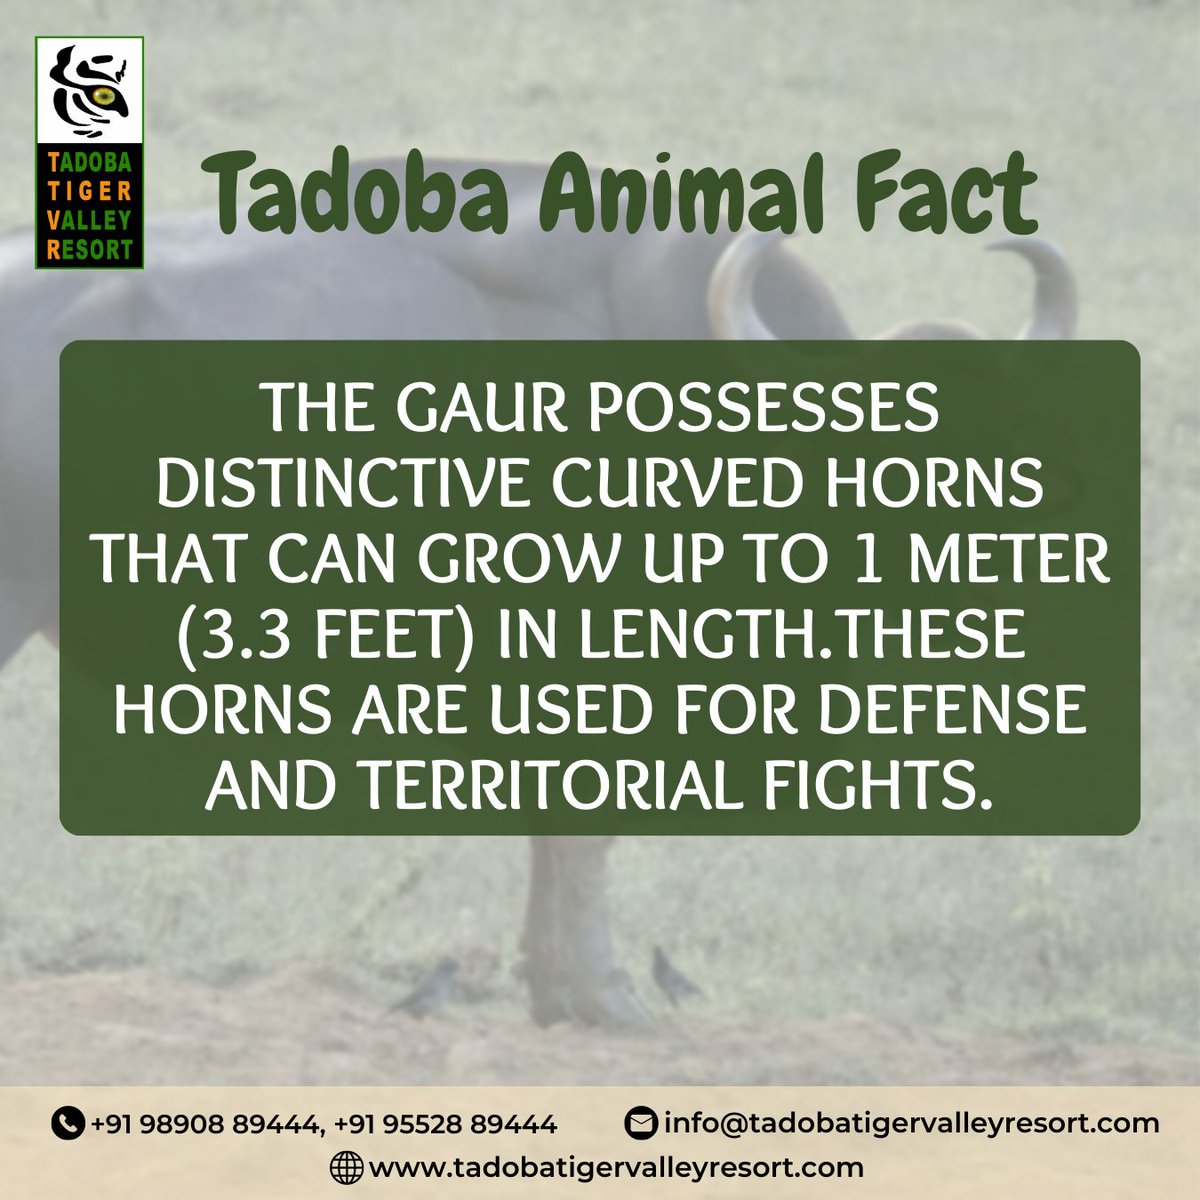 The Gaur, a true symbol of strength, boasts impressive curved horns up to 1 meter long. #tadoabtigervalley #JungleSafari #TadobaSafari